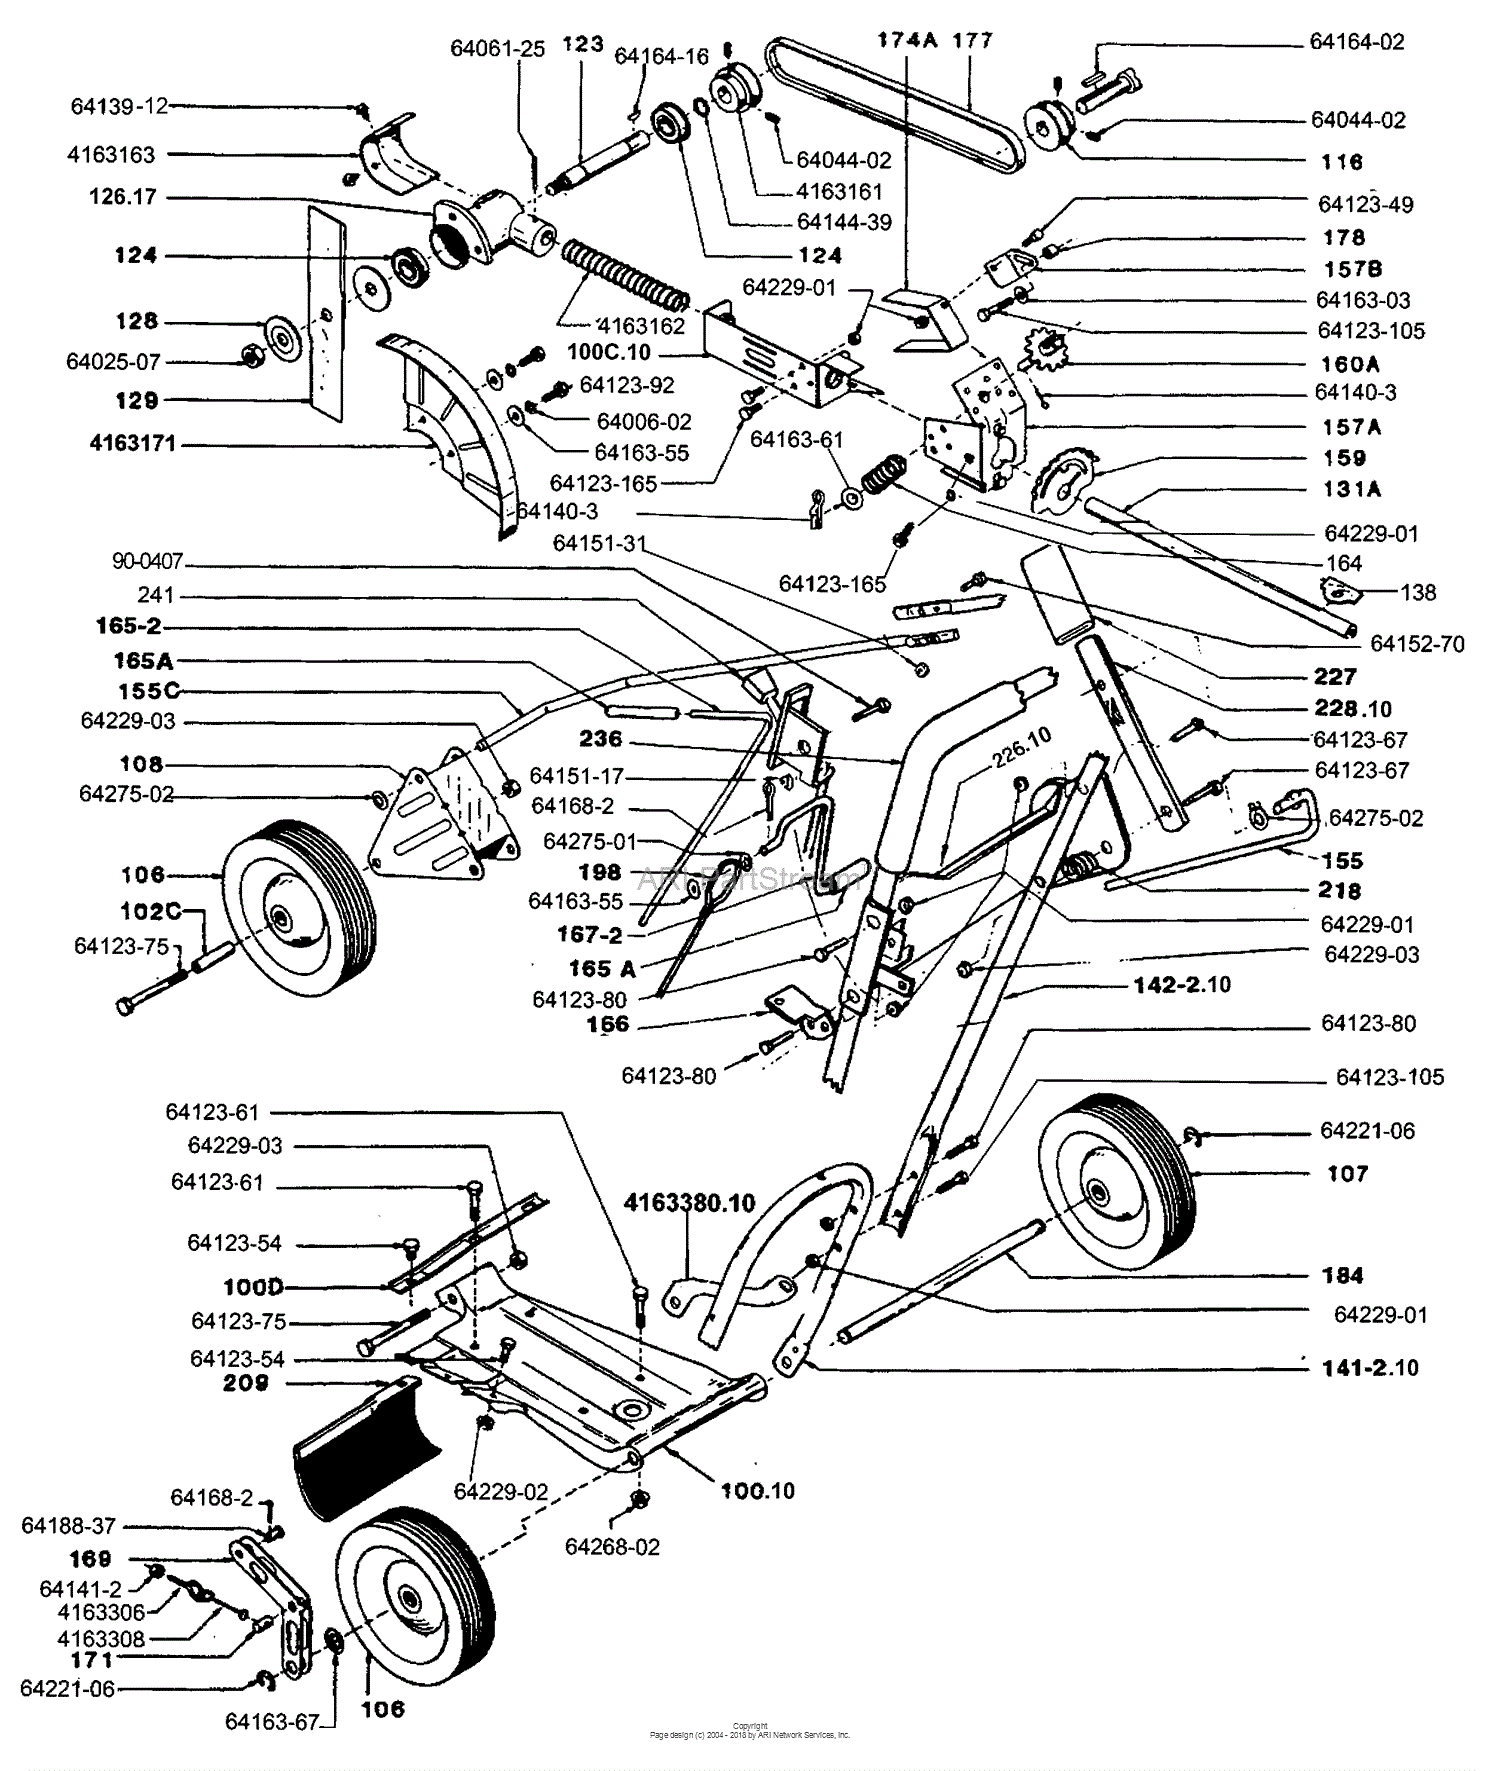 Bunton, Bobcat, Ryan 6002 Deluxe Model Edger Parts Diagram ... little wonder engine diagrams 